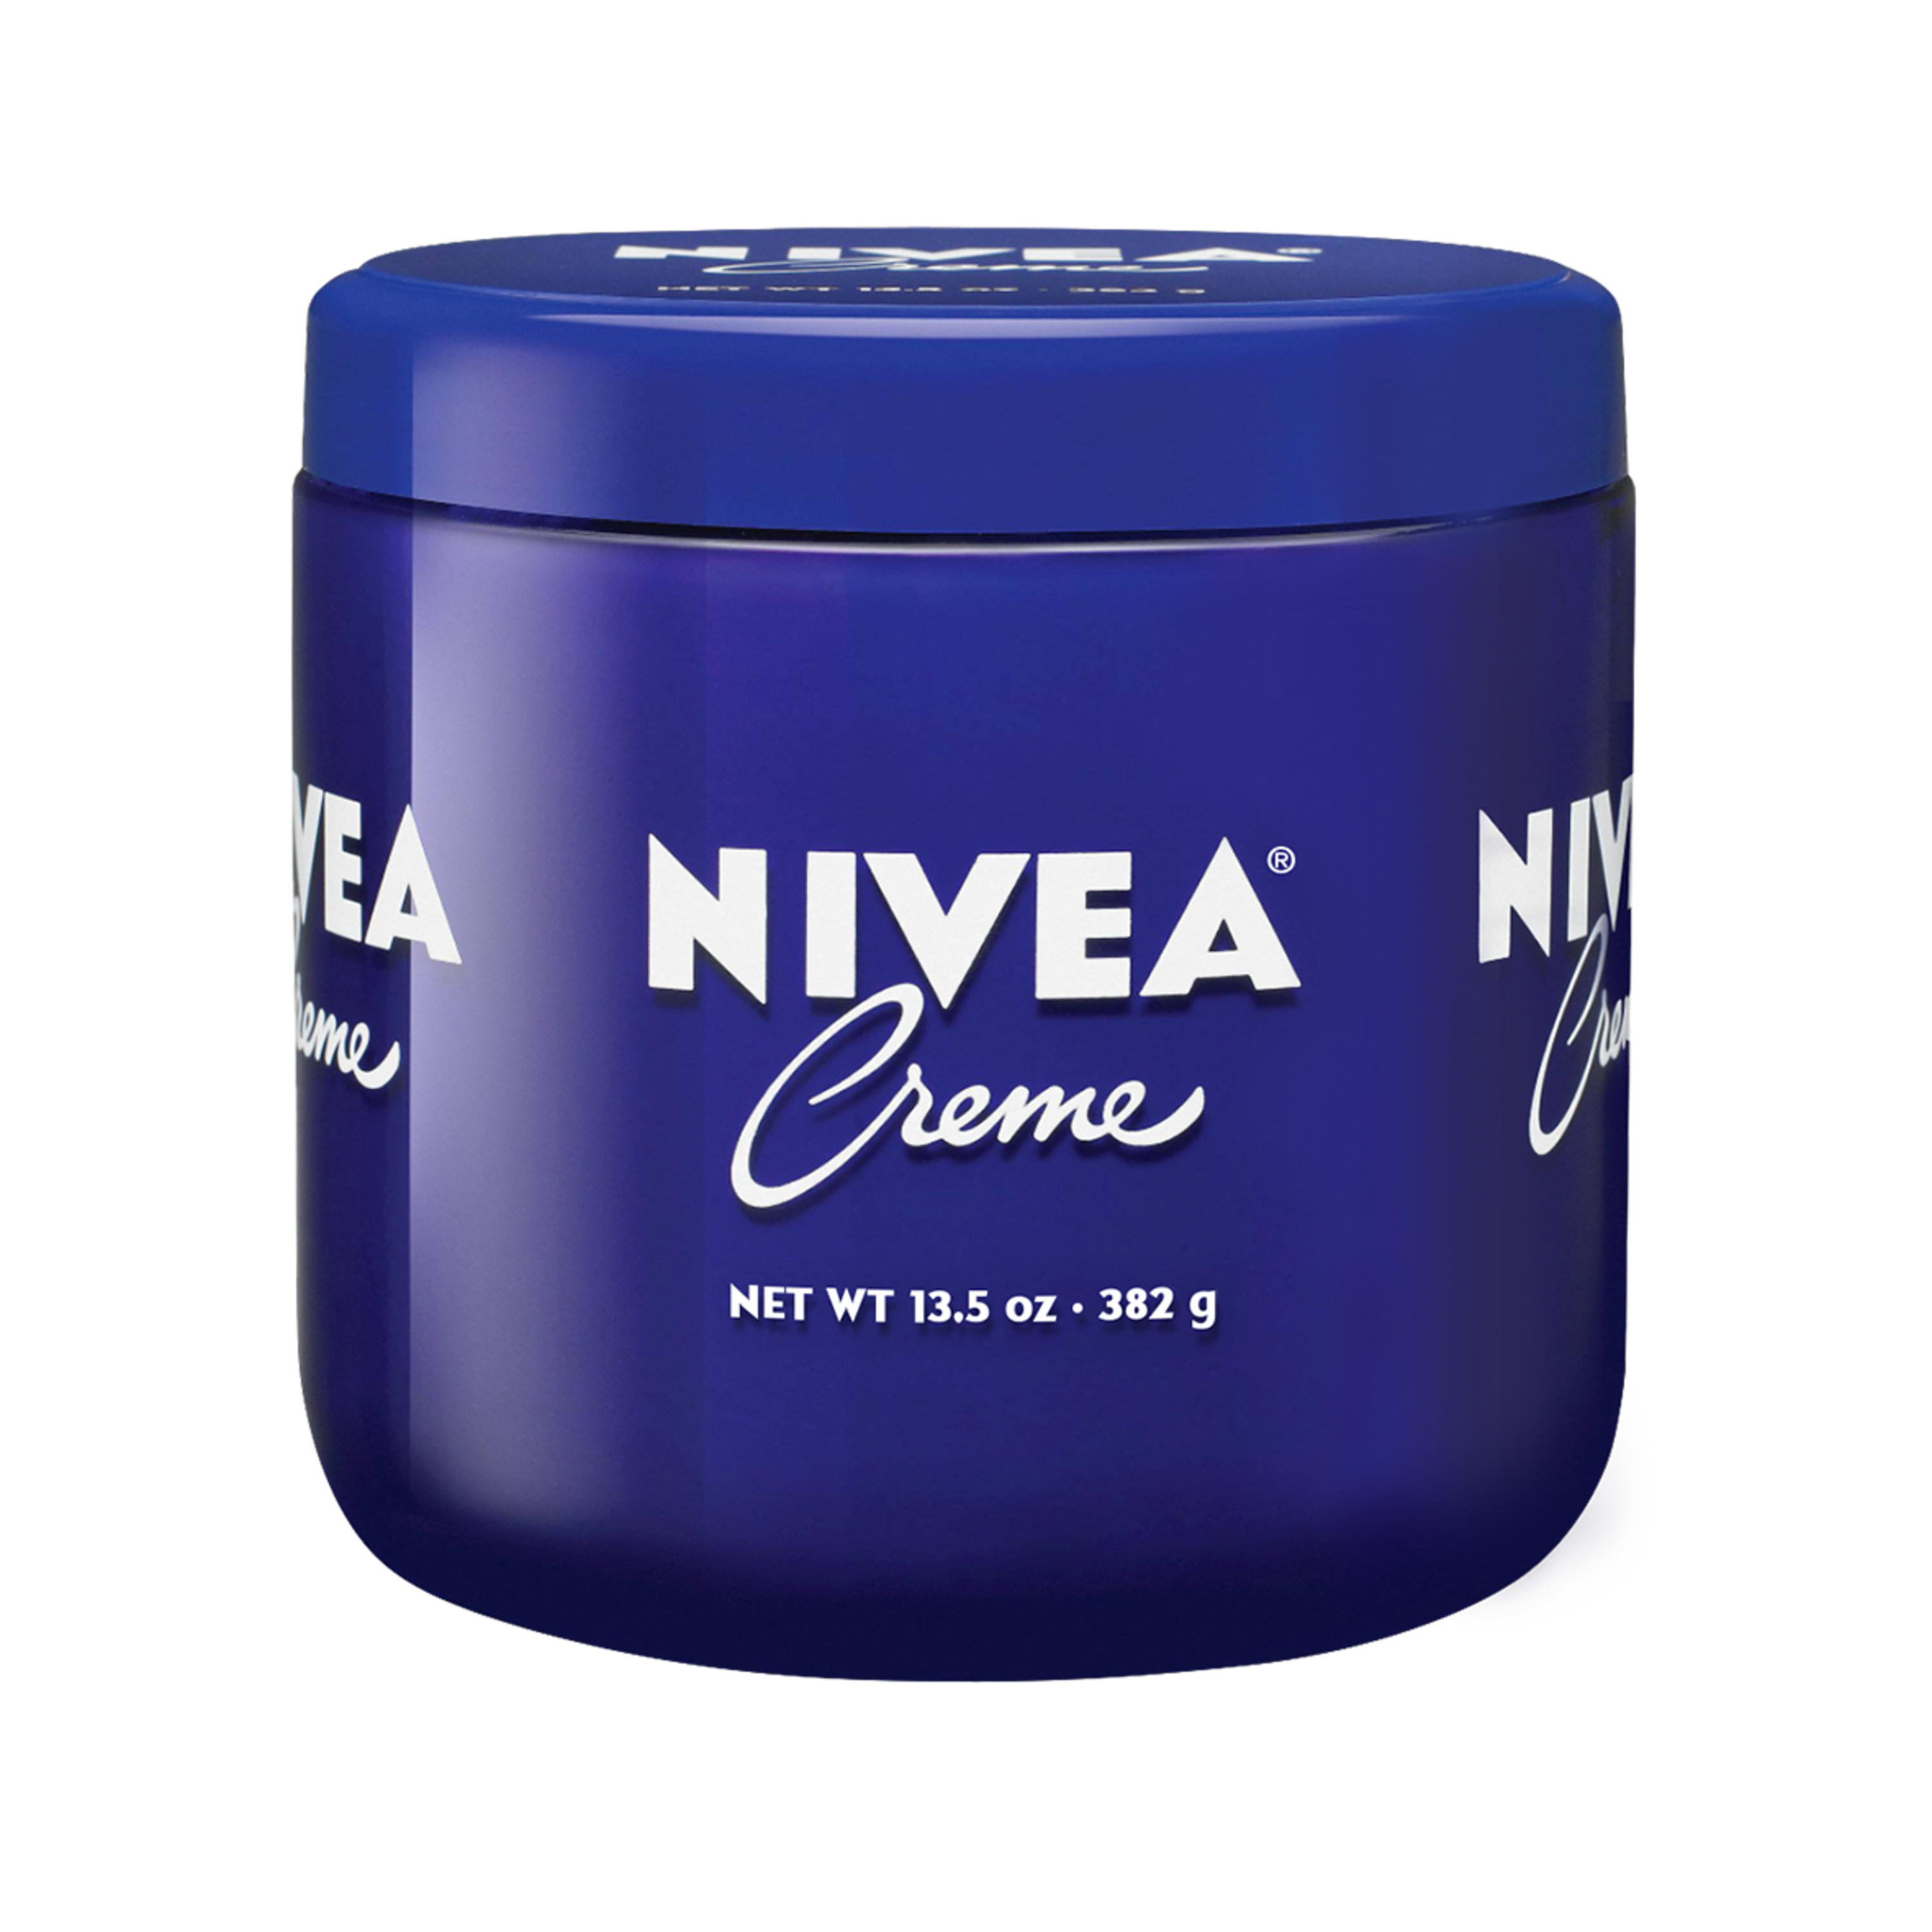 NIVEA Creme Body, Face and Hand Moisturizing Cream, 13.5 Oz Jar - image 1 of 12